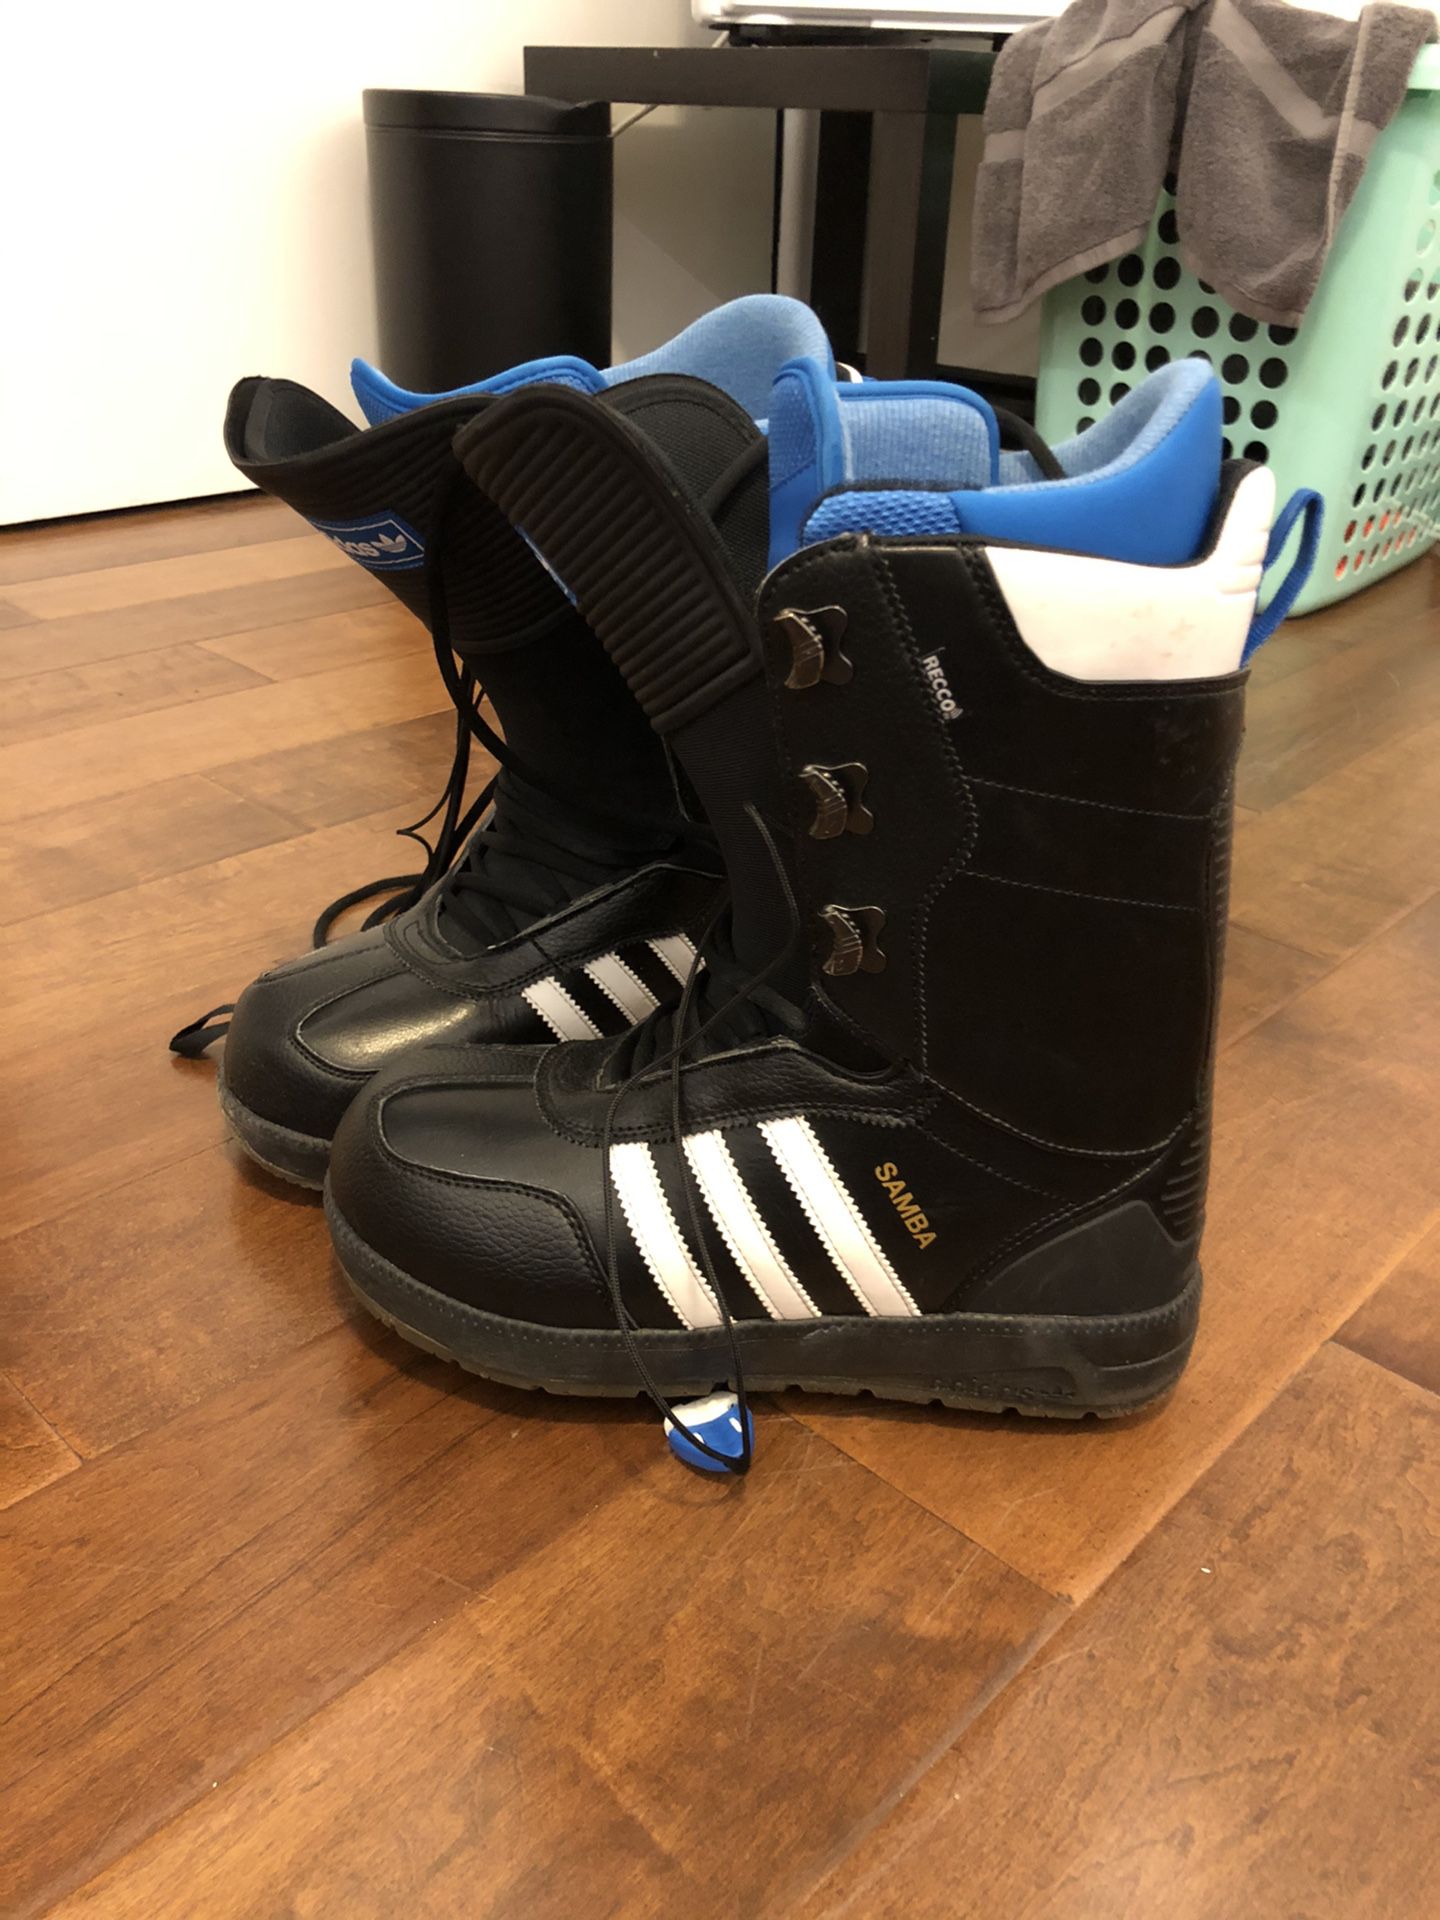 Adidas Snowboarding Boots